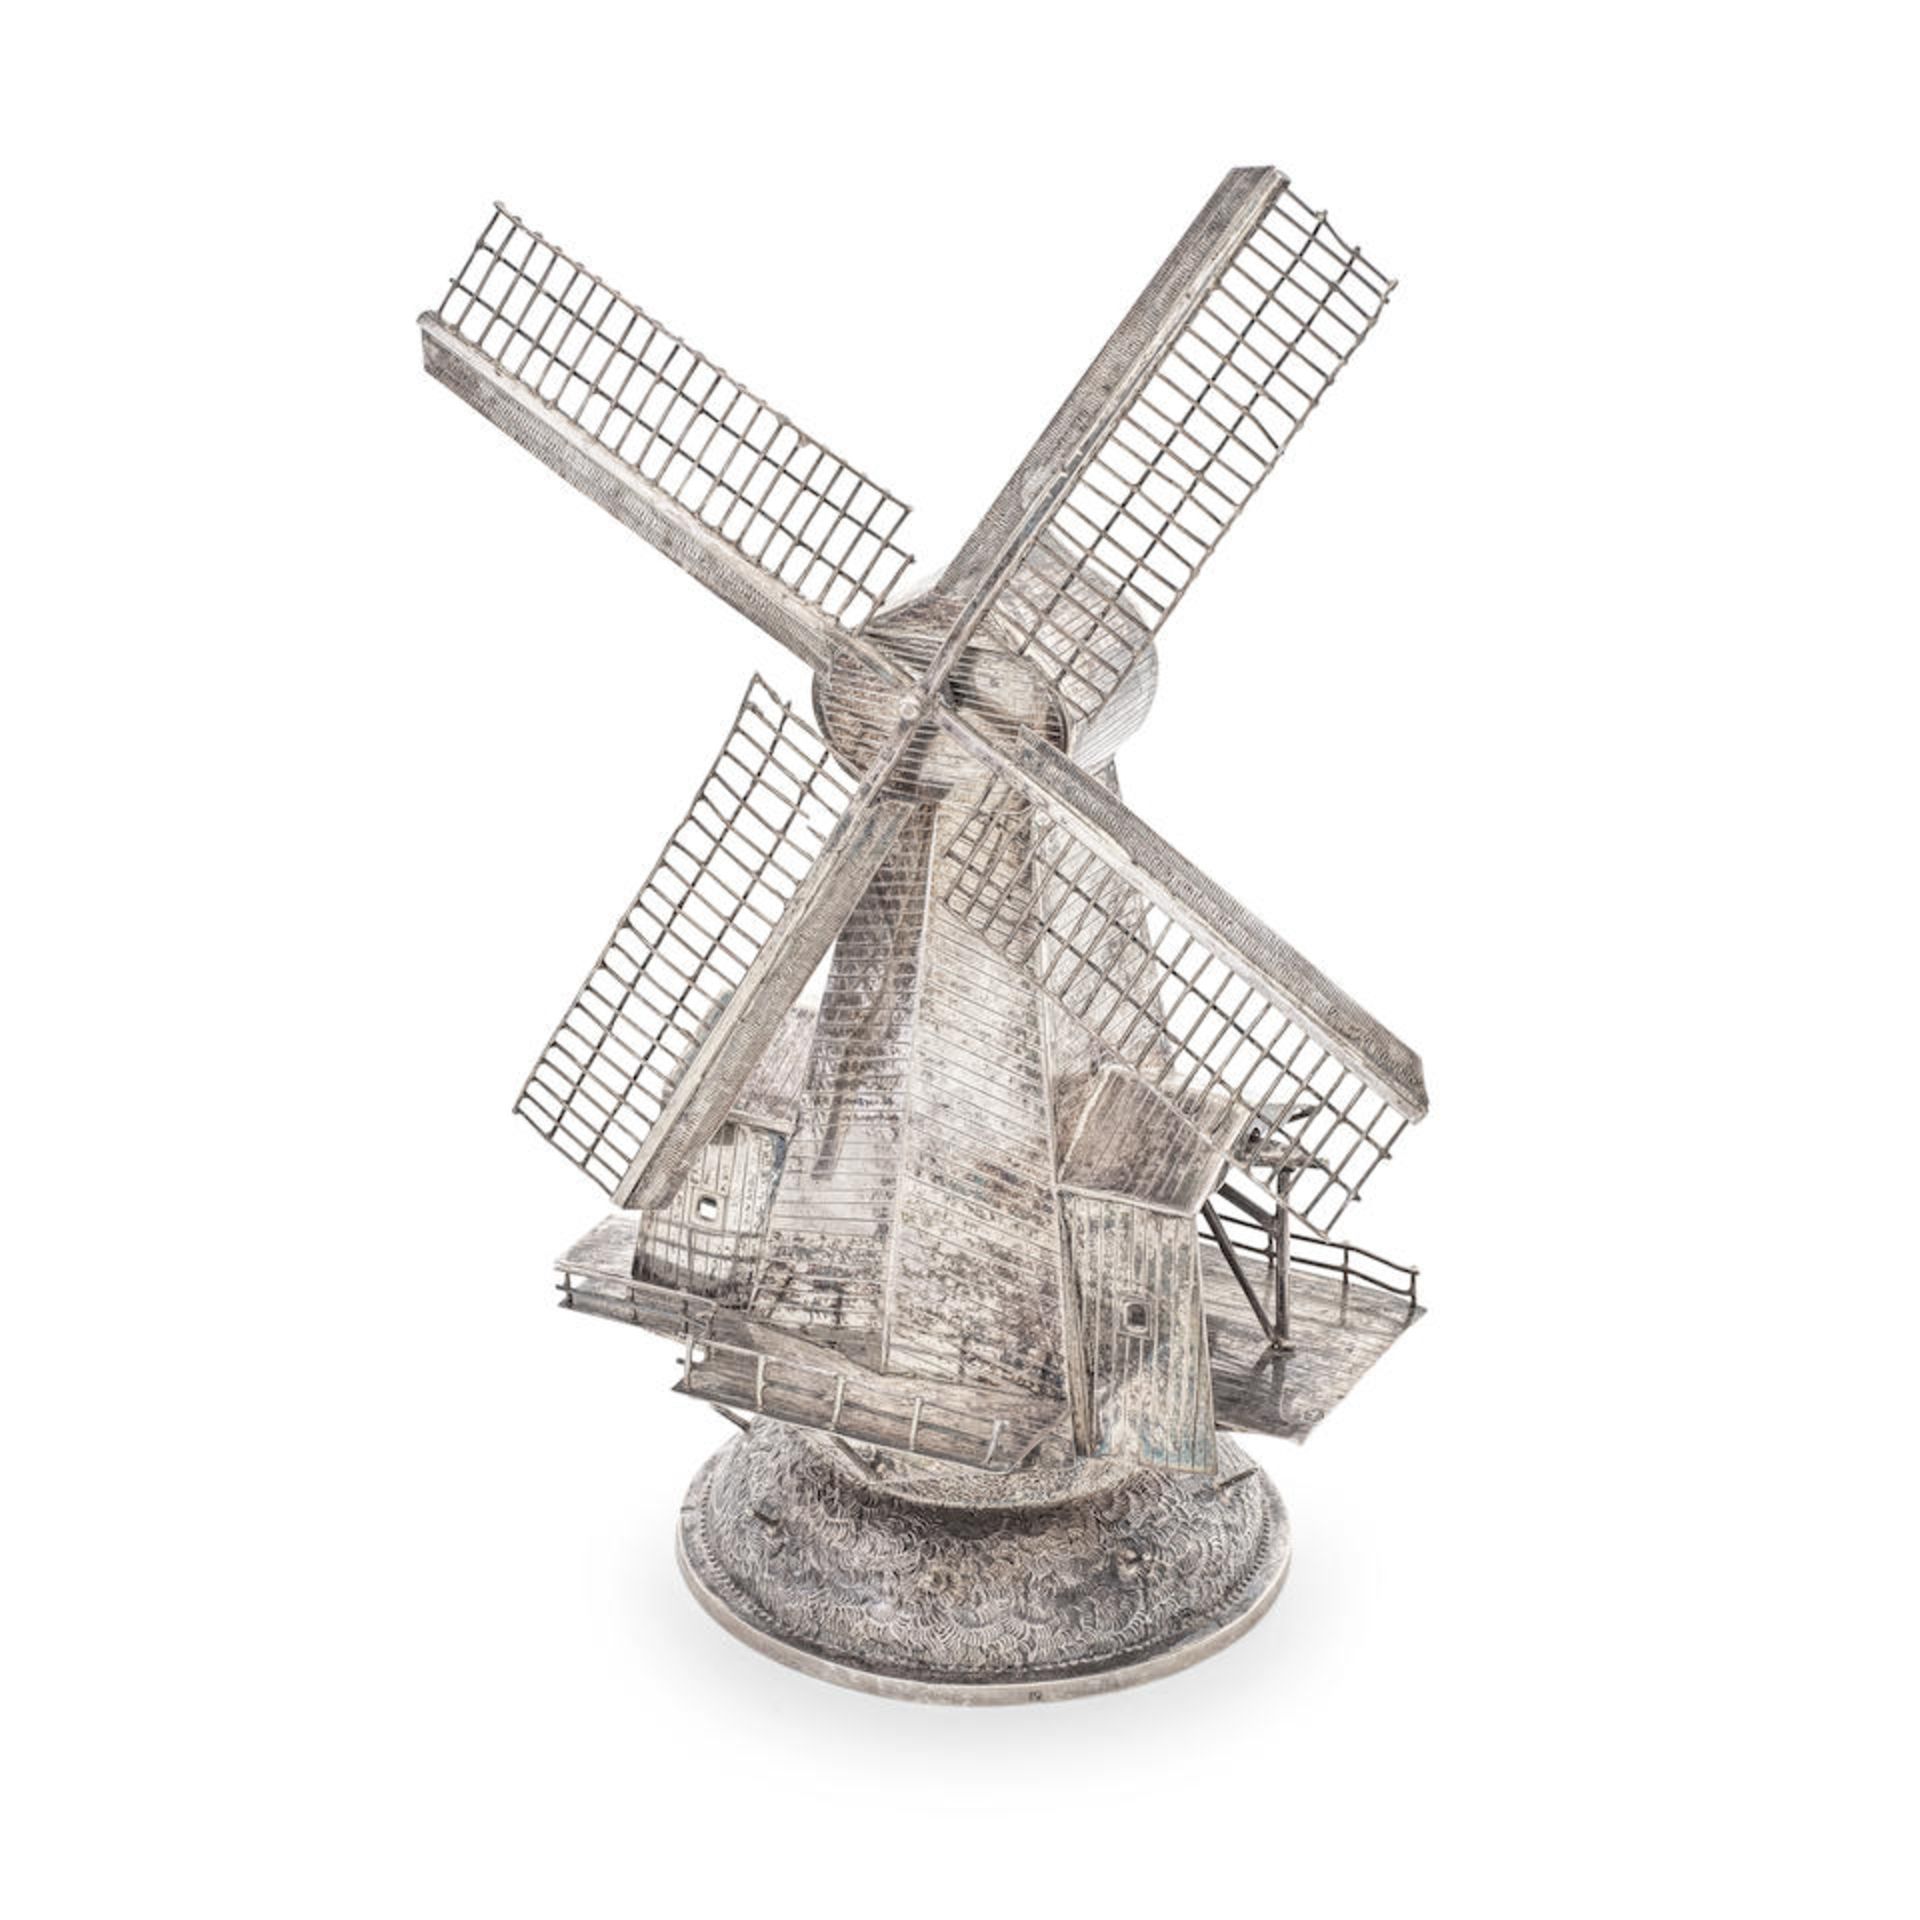 A Dutch silver presentation table 'windmill' J de Vries, Leeuwarden / Assen 1929, marked .833